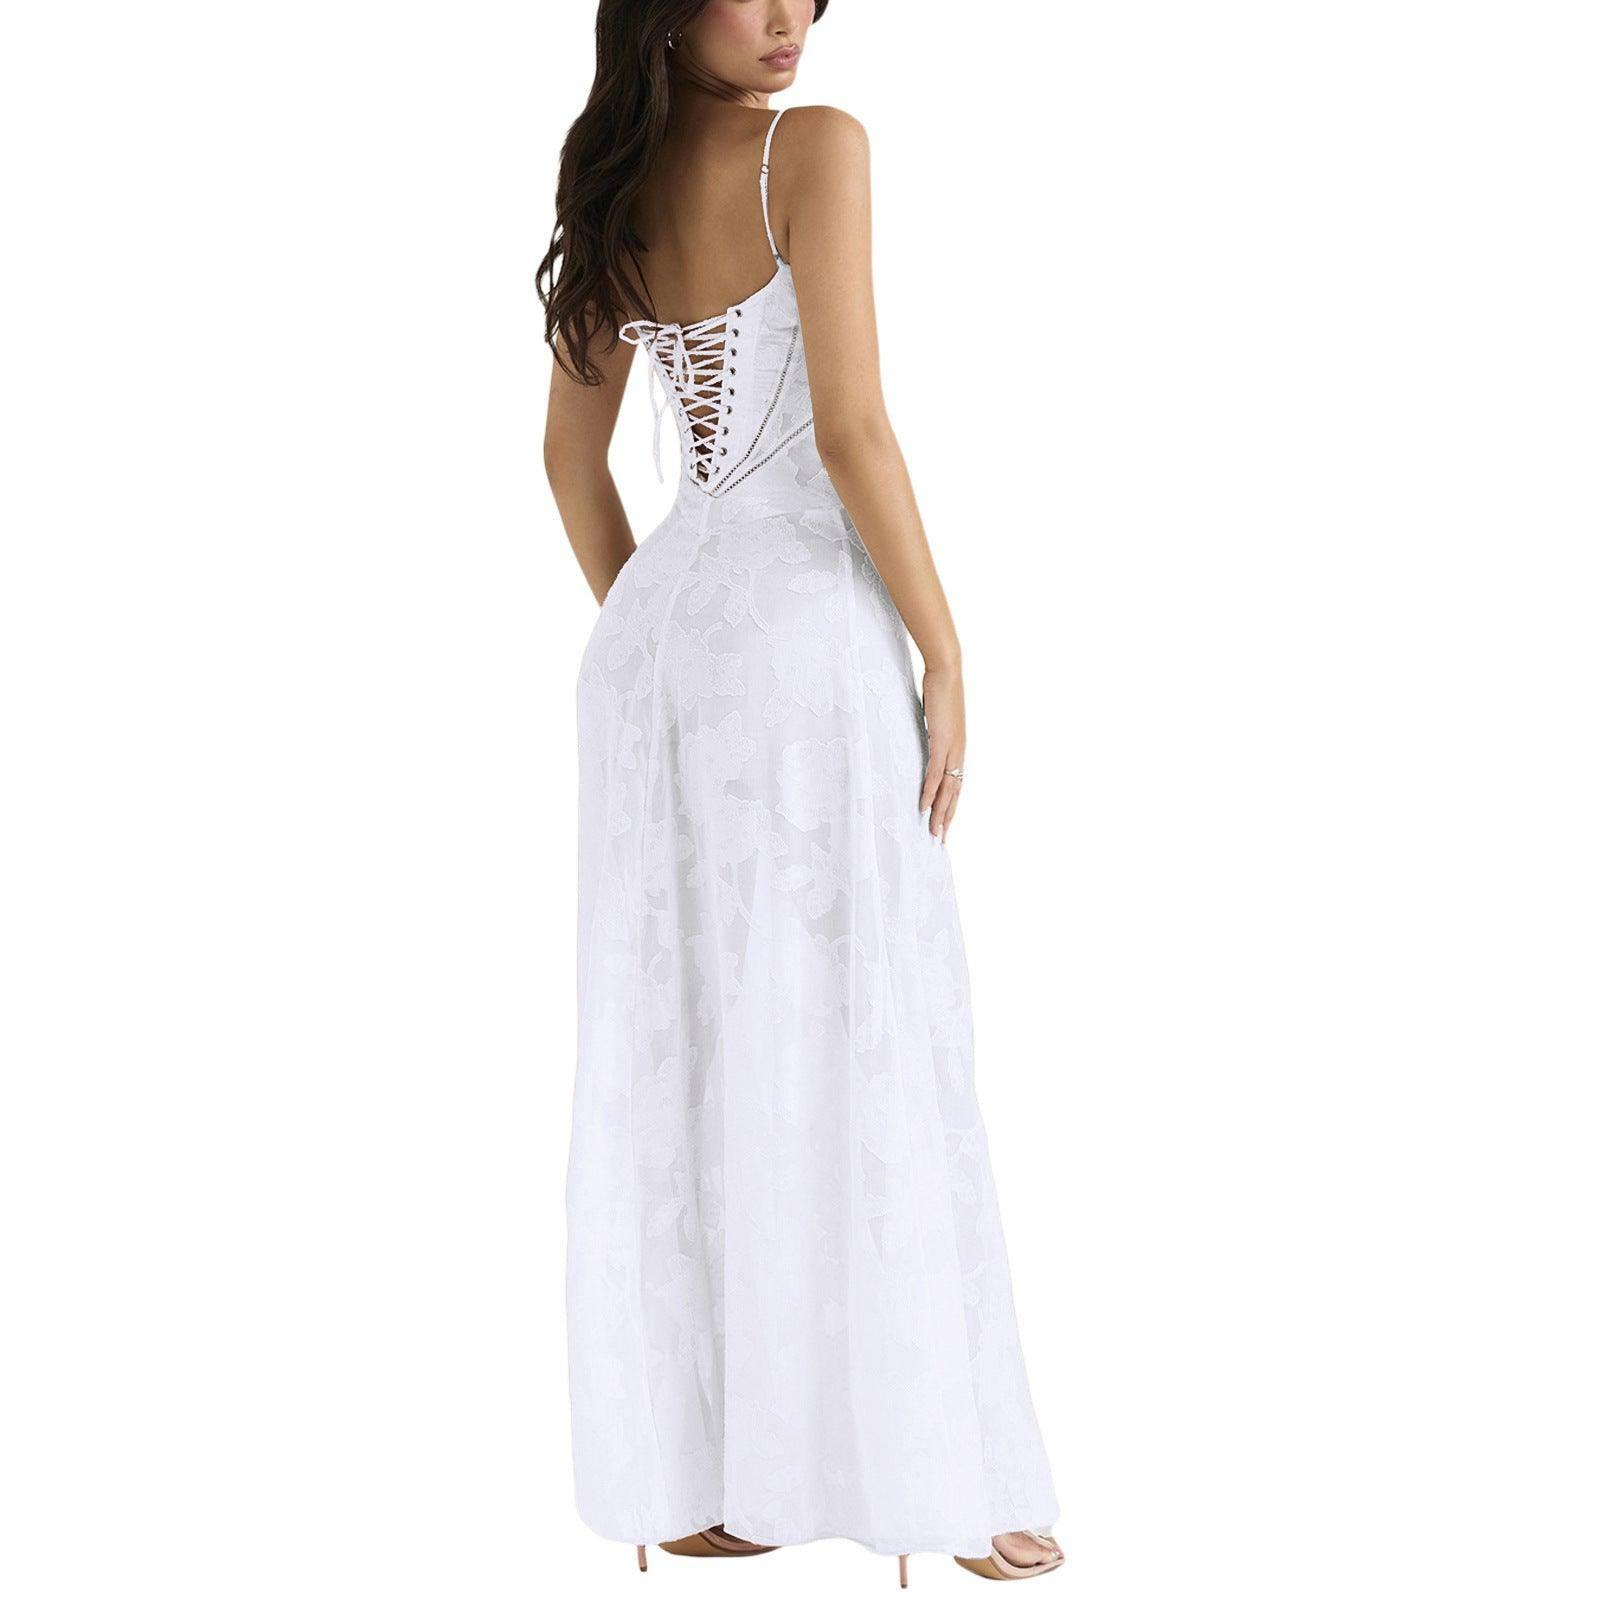 Fashion Suspender Lace Long Dress Summer Strapless Collar-6